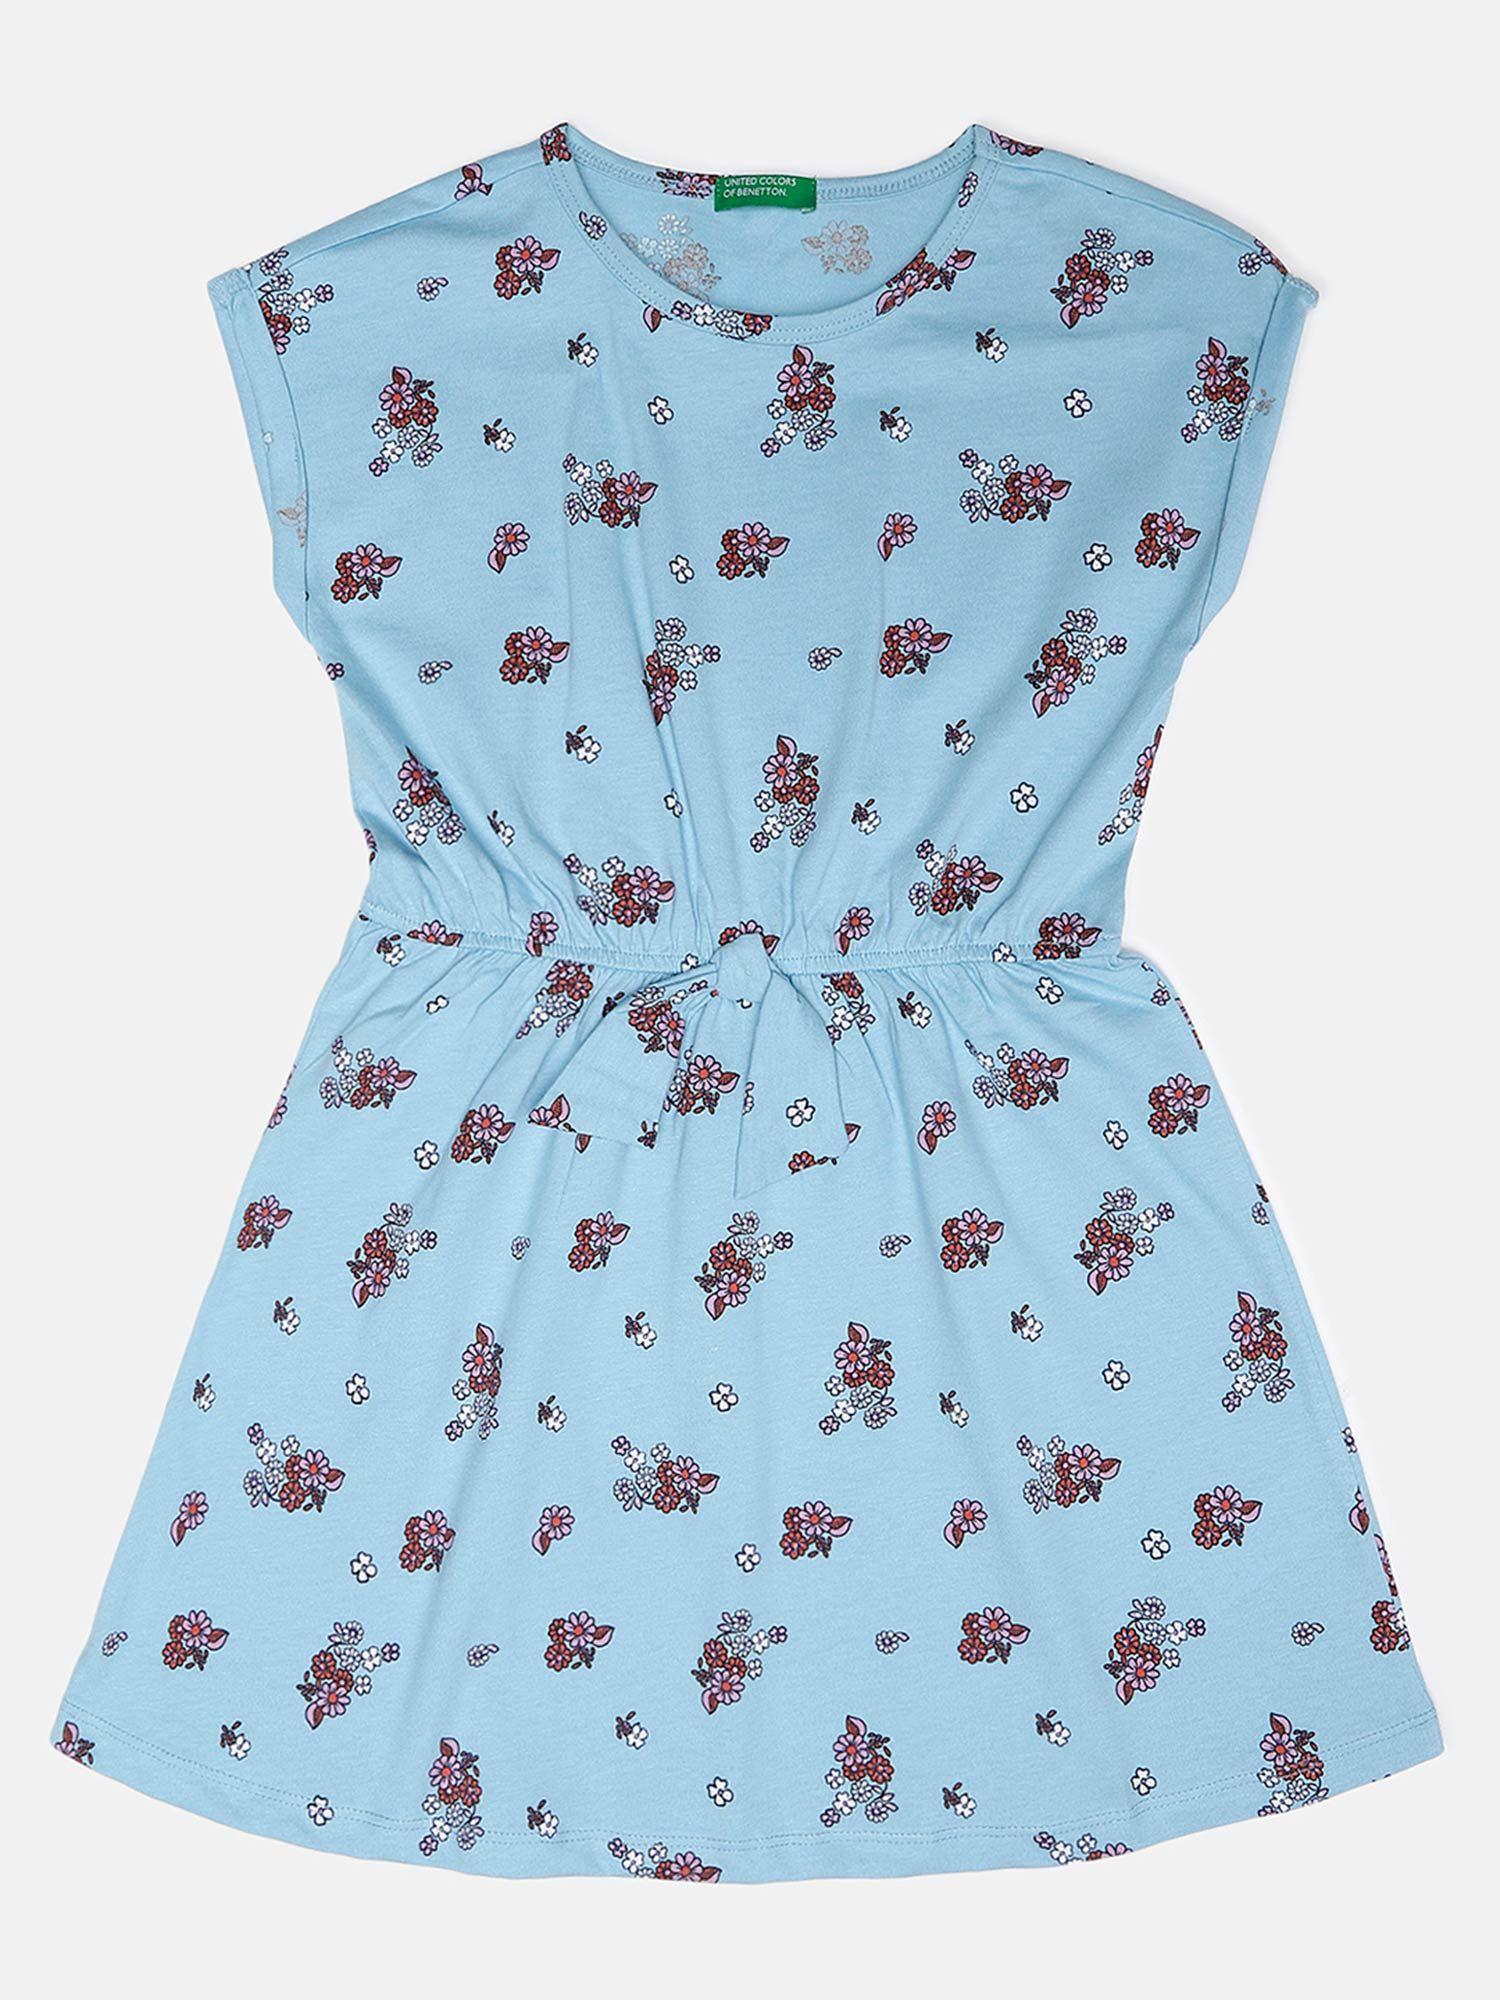 printed dresses- blue